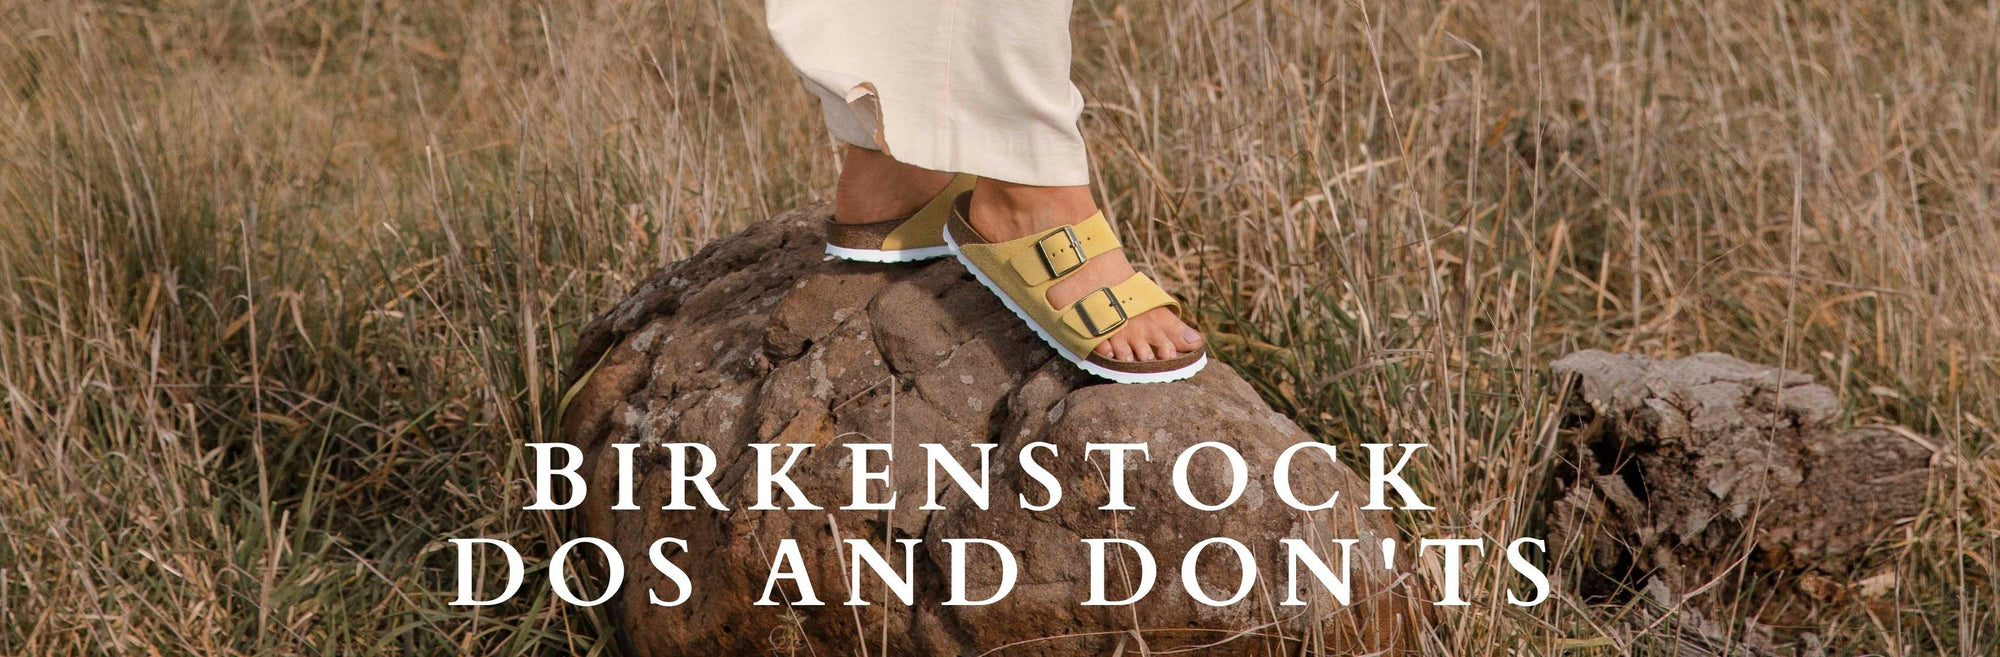 slides, hiking sandals, birkenstock, feet | Tourist outfit, Preppy men,  Male feet